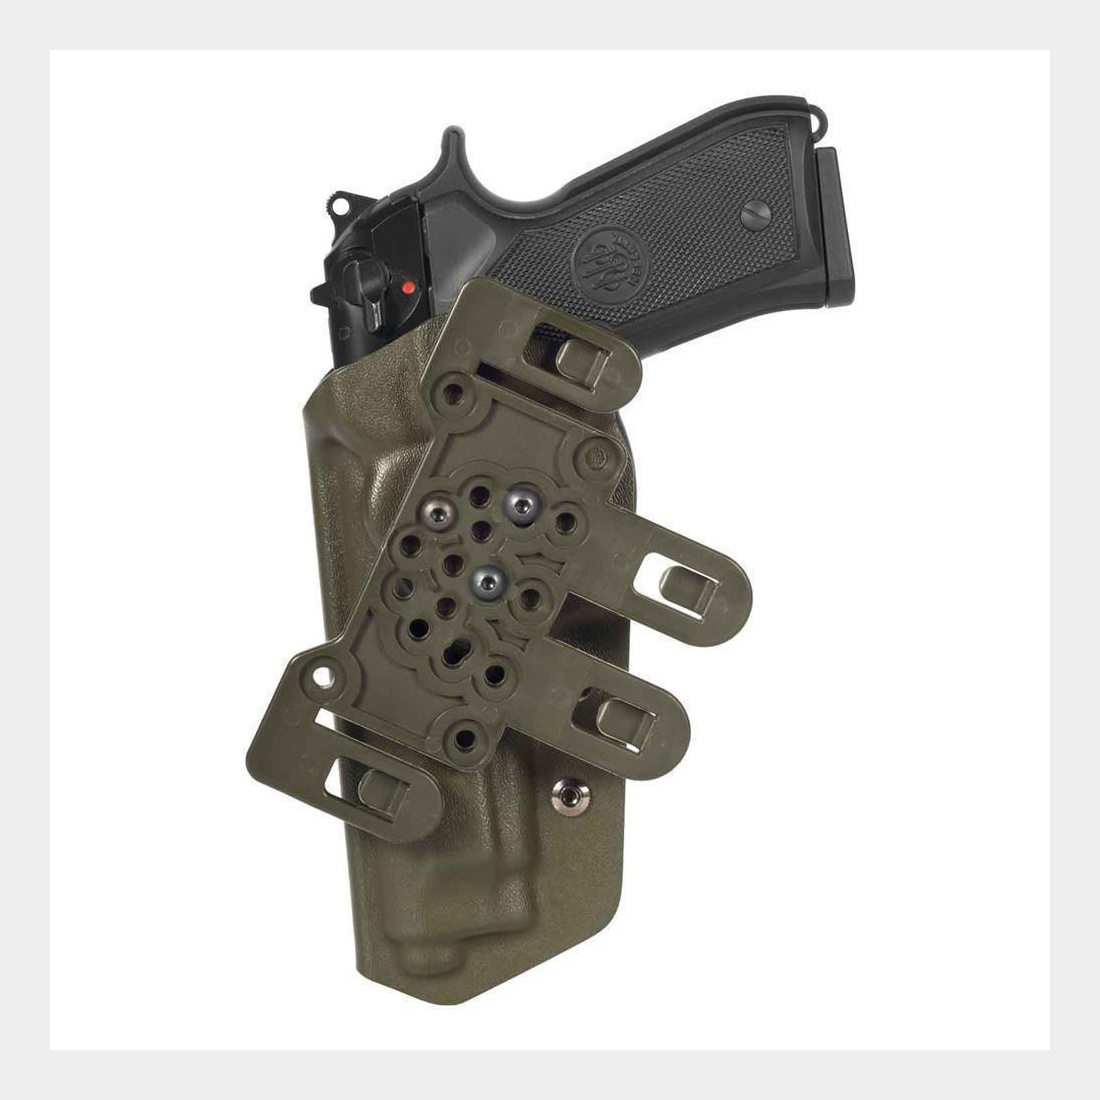 Brustholster mit MOLLE Plattform Beretta PX4 Storm / Compact / 8000-OD Green-Linkshänder